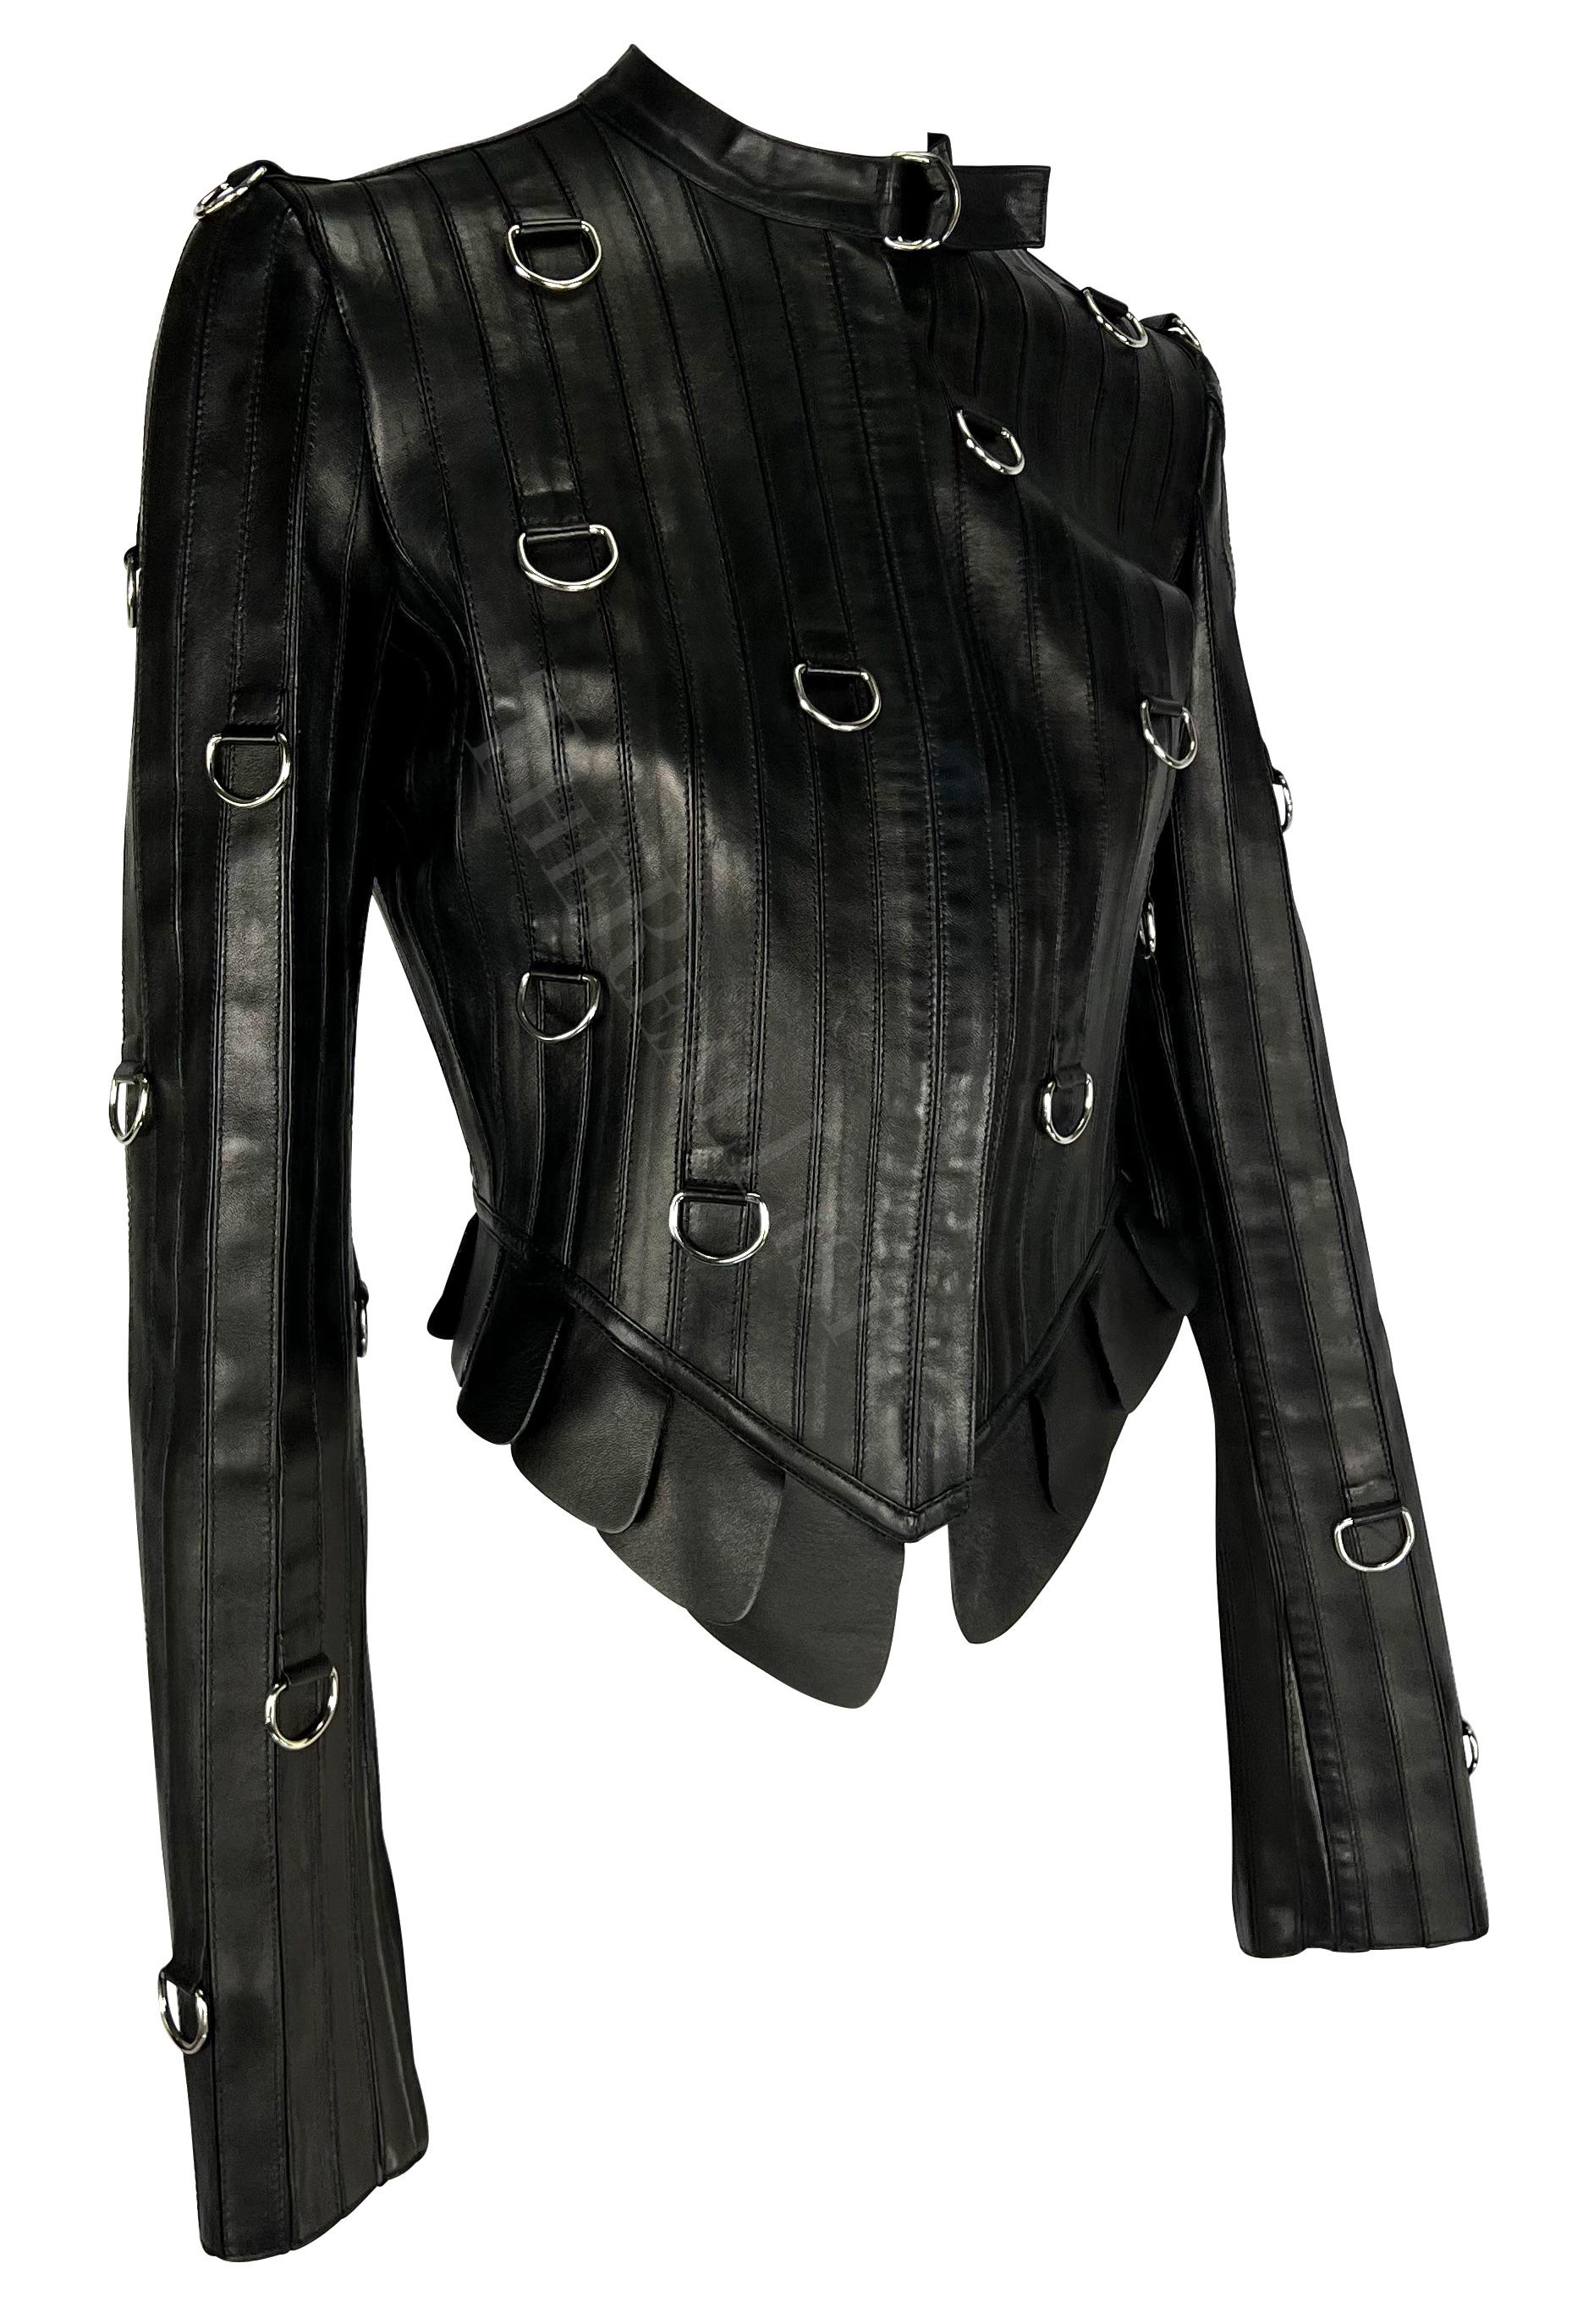 S/S 2003 Alexander McQueen Irere Runway Black Leather Ring Moto Jacket For Sale 2